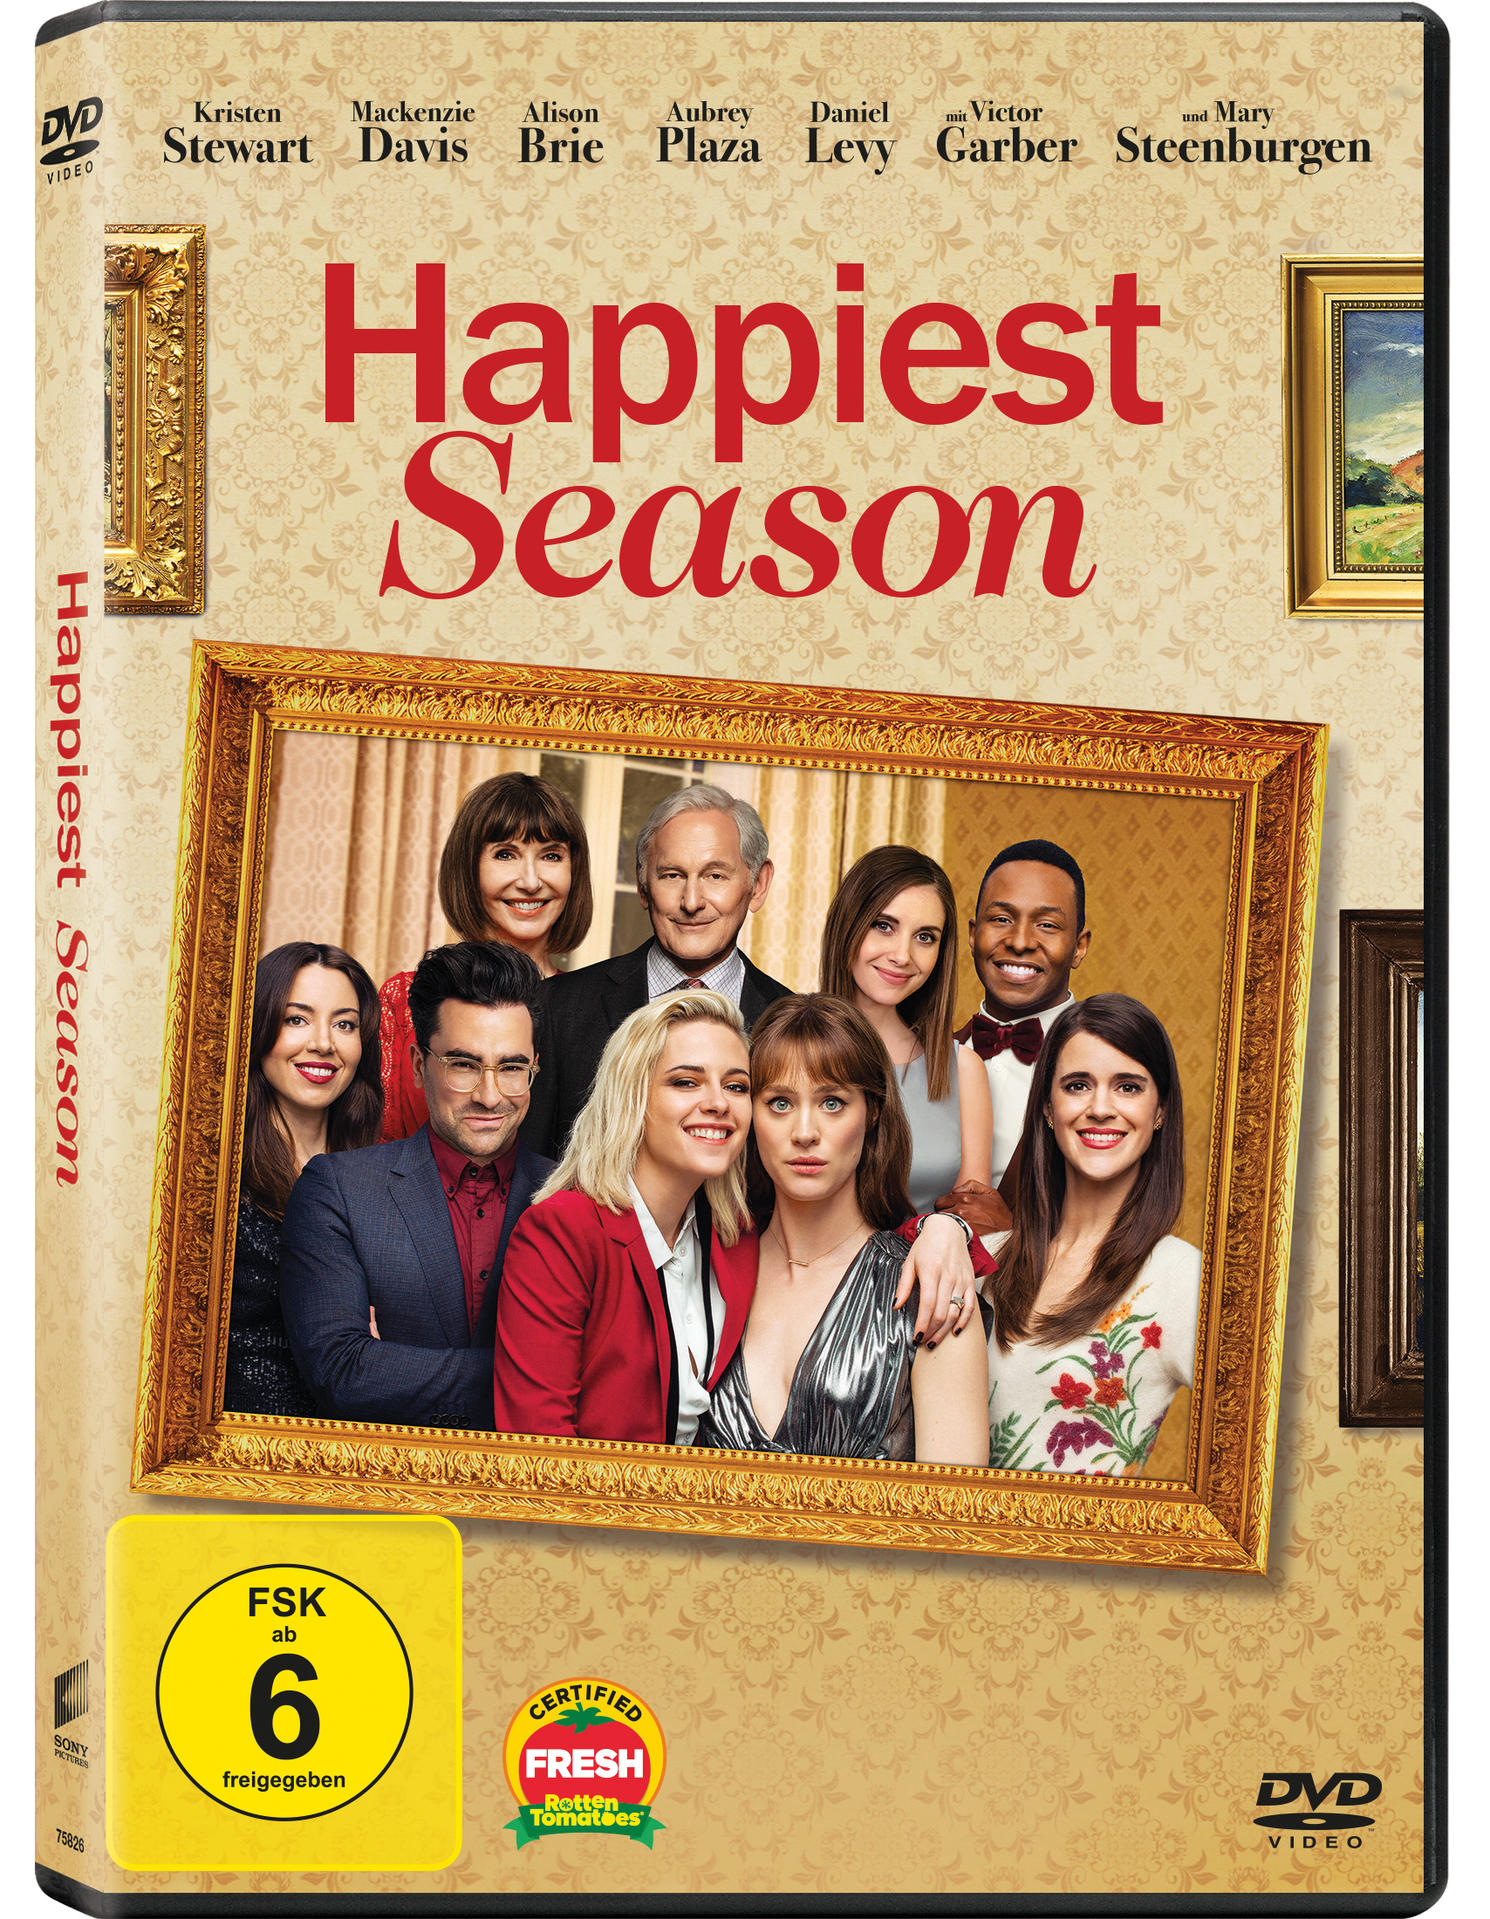 Season DVD Happiest